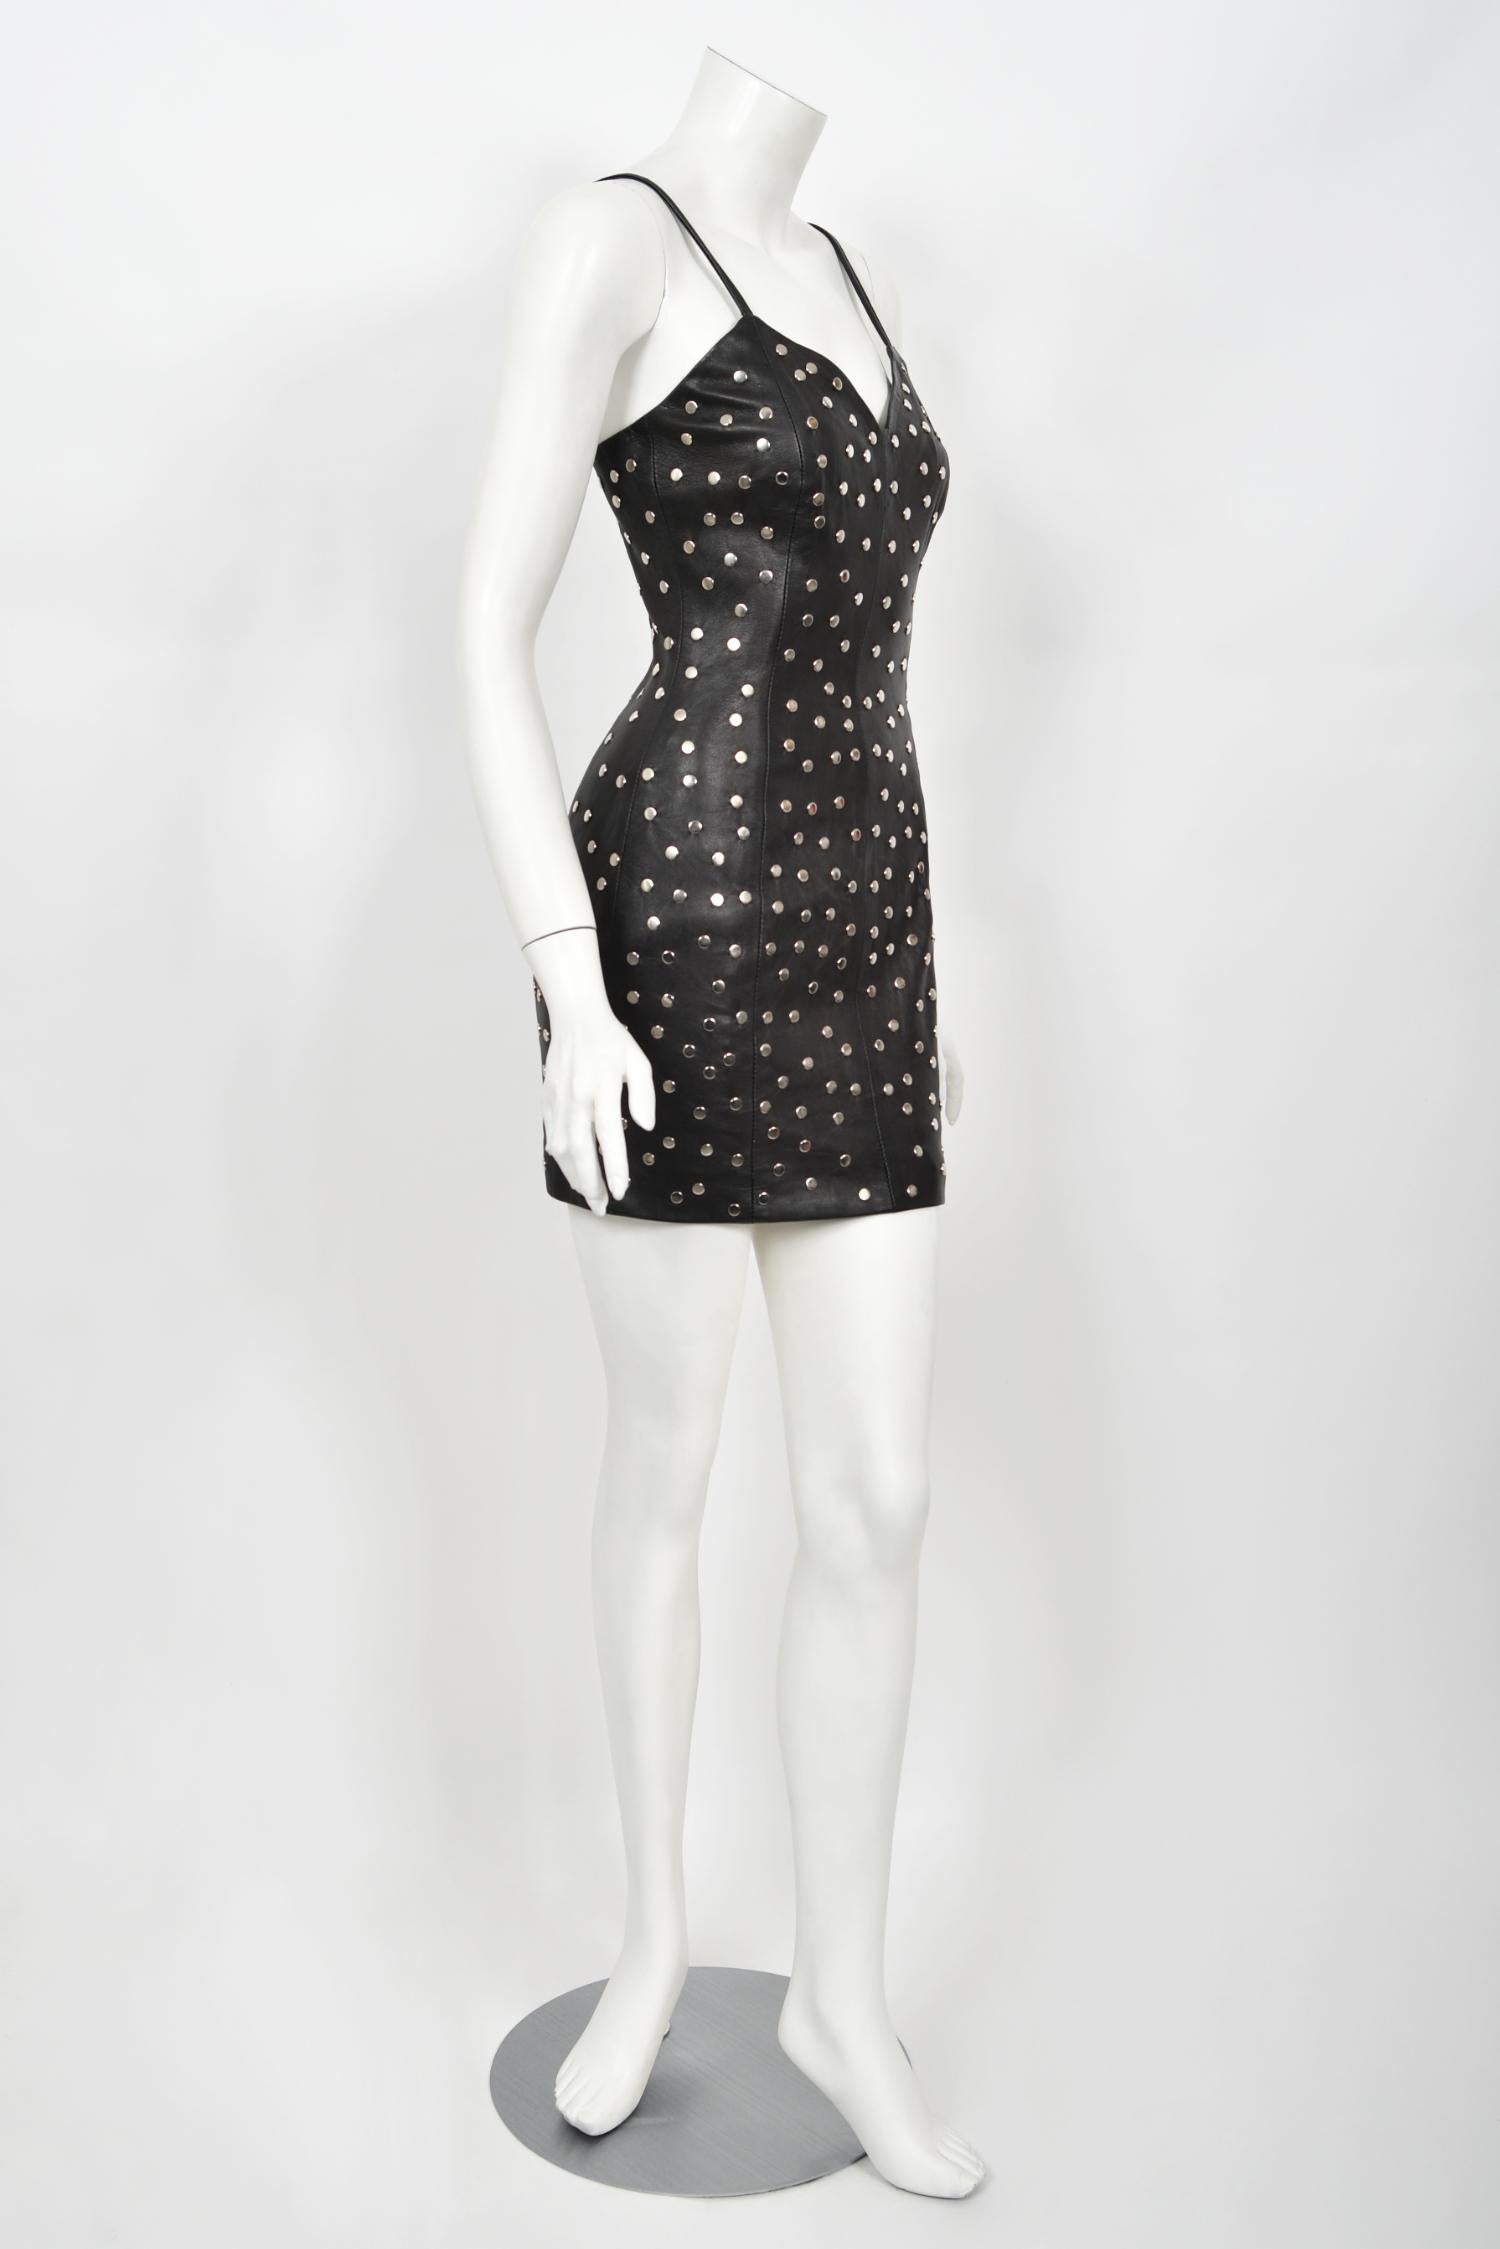 Vintage 1991 Dolce & Gabbana Documented Runway Studded Black Leather Mini Dress For Sale 7